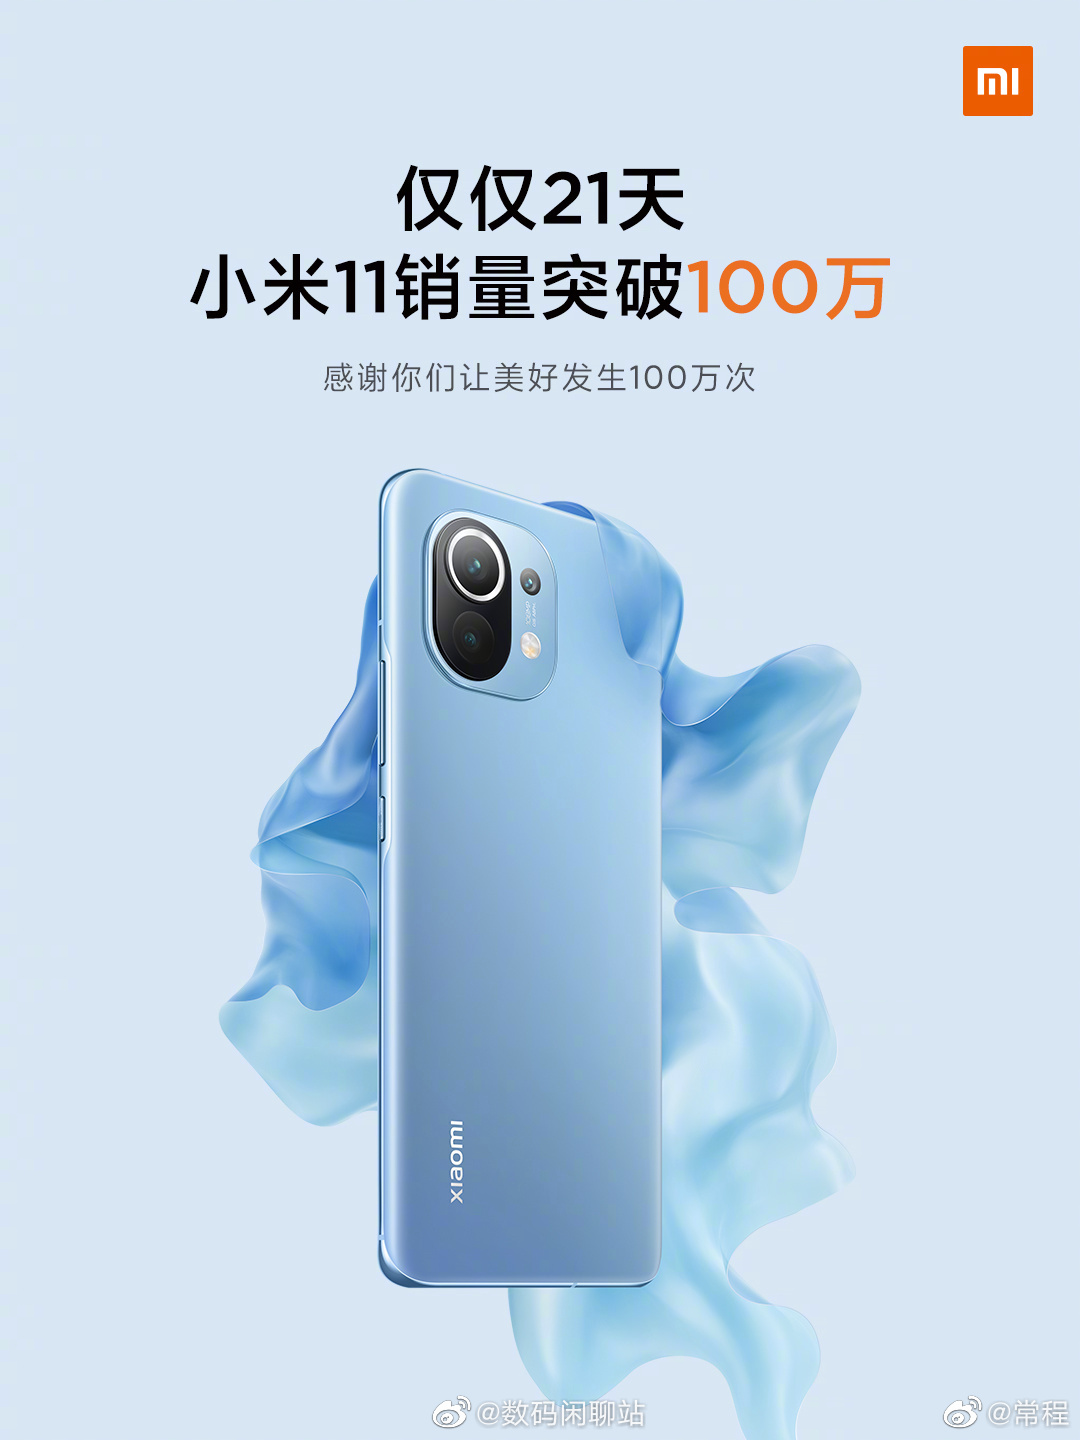  Невероятная популярность флагманского Mi 11 Xiaomi  - million_za_21_den_xiaomi_ob_uspehah_prodazh_flagmanskogo_mi_11_picture2_0